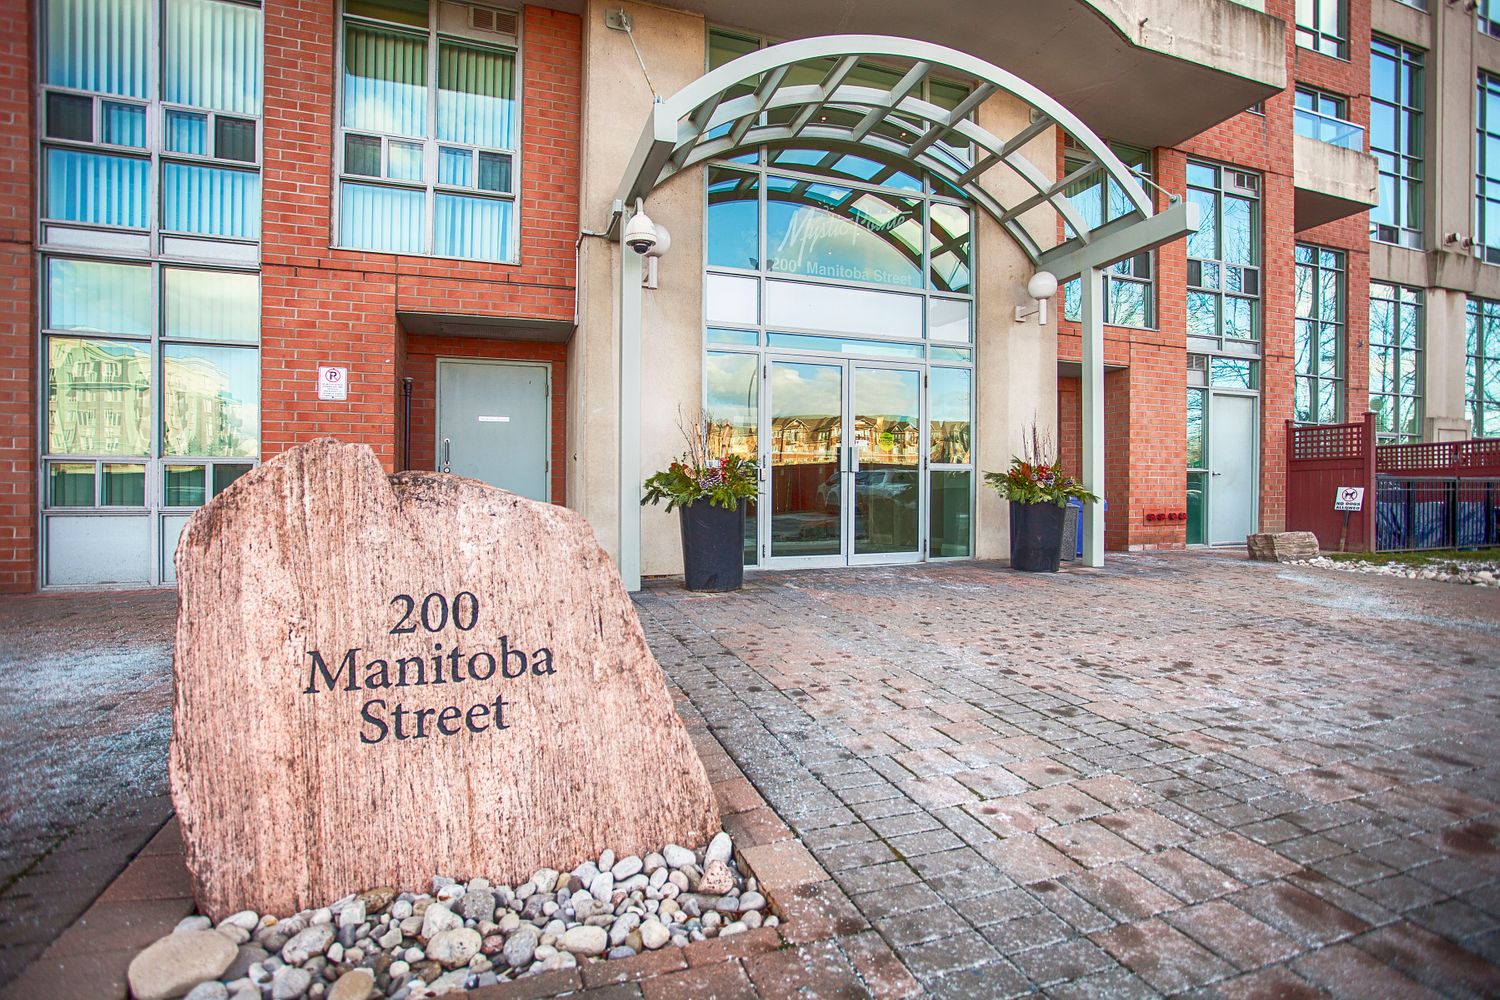 200 Manitoba Street. Mystic Pointe - Skylofts II is located in  Etobicoke, Toronto - image #3 of 3